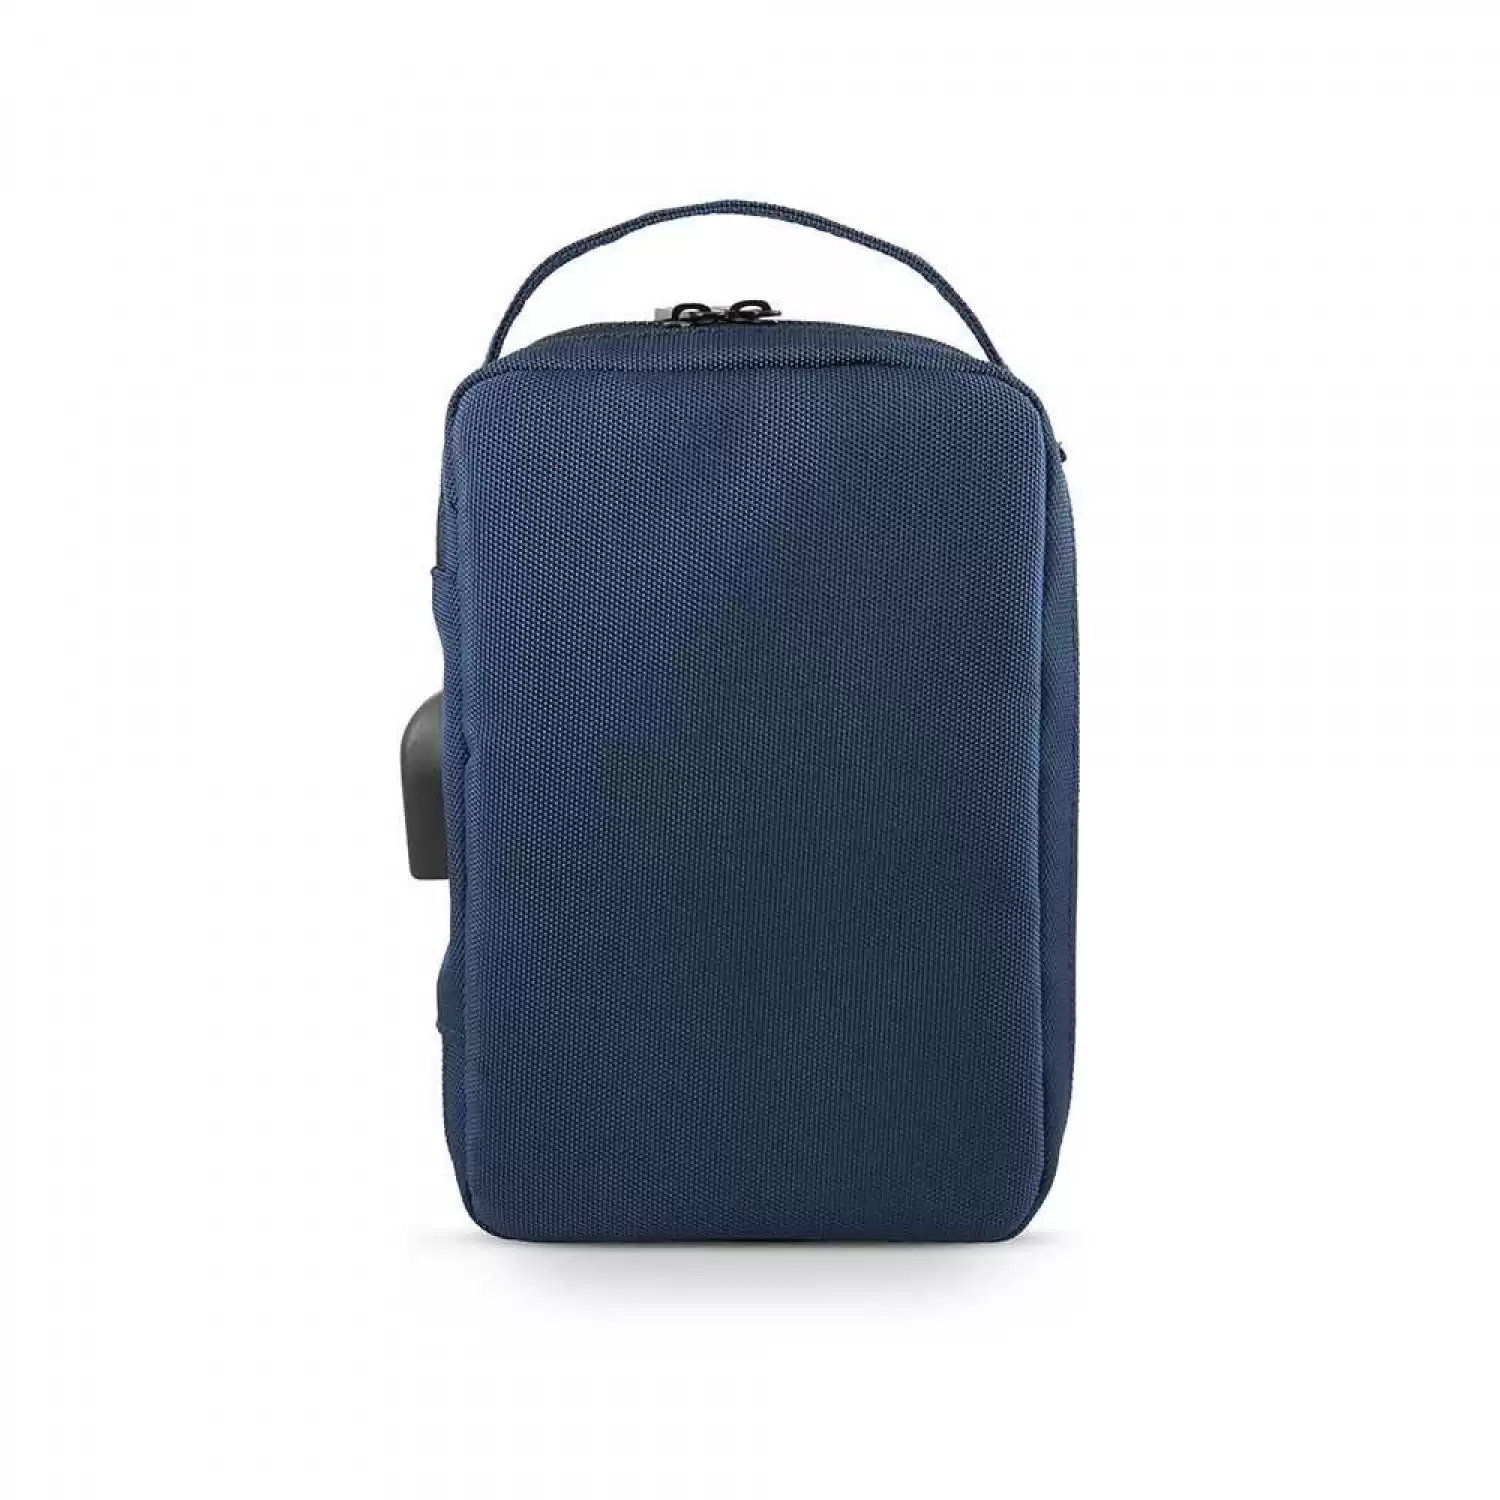 u-s-polo-assn-nylon-tablet-bag-for-electronic-accessories-navyushbnyemnv-16067-4-1500×1500